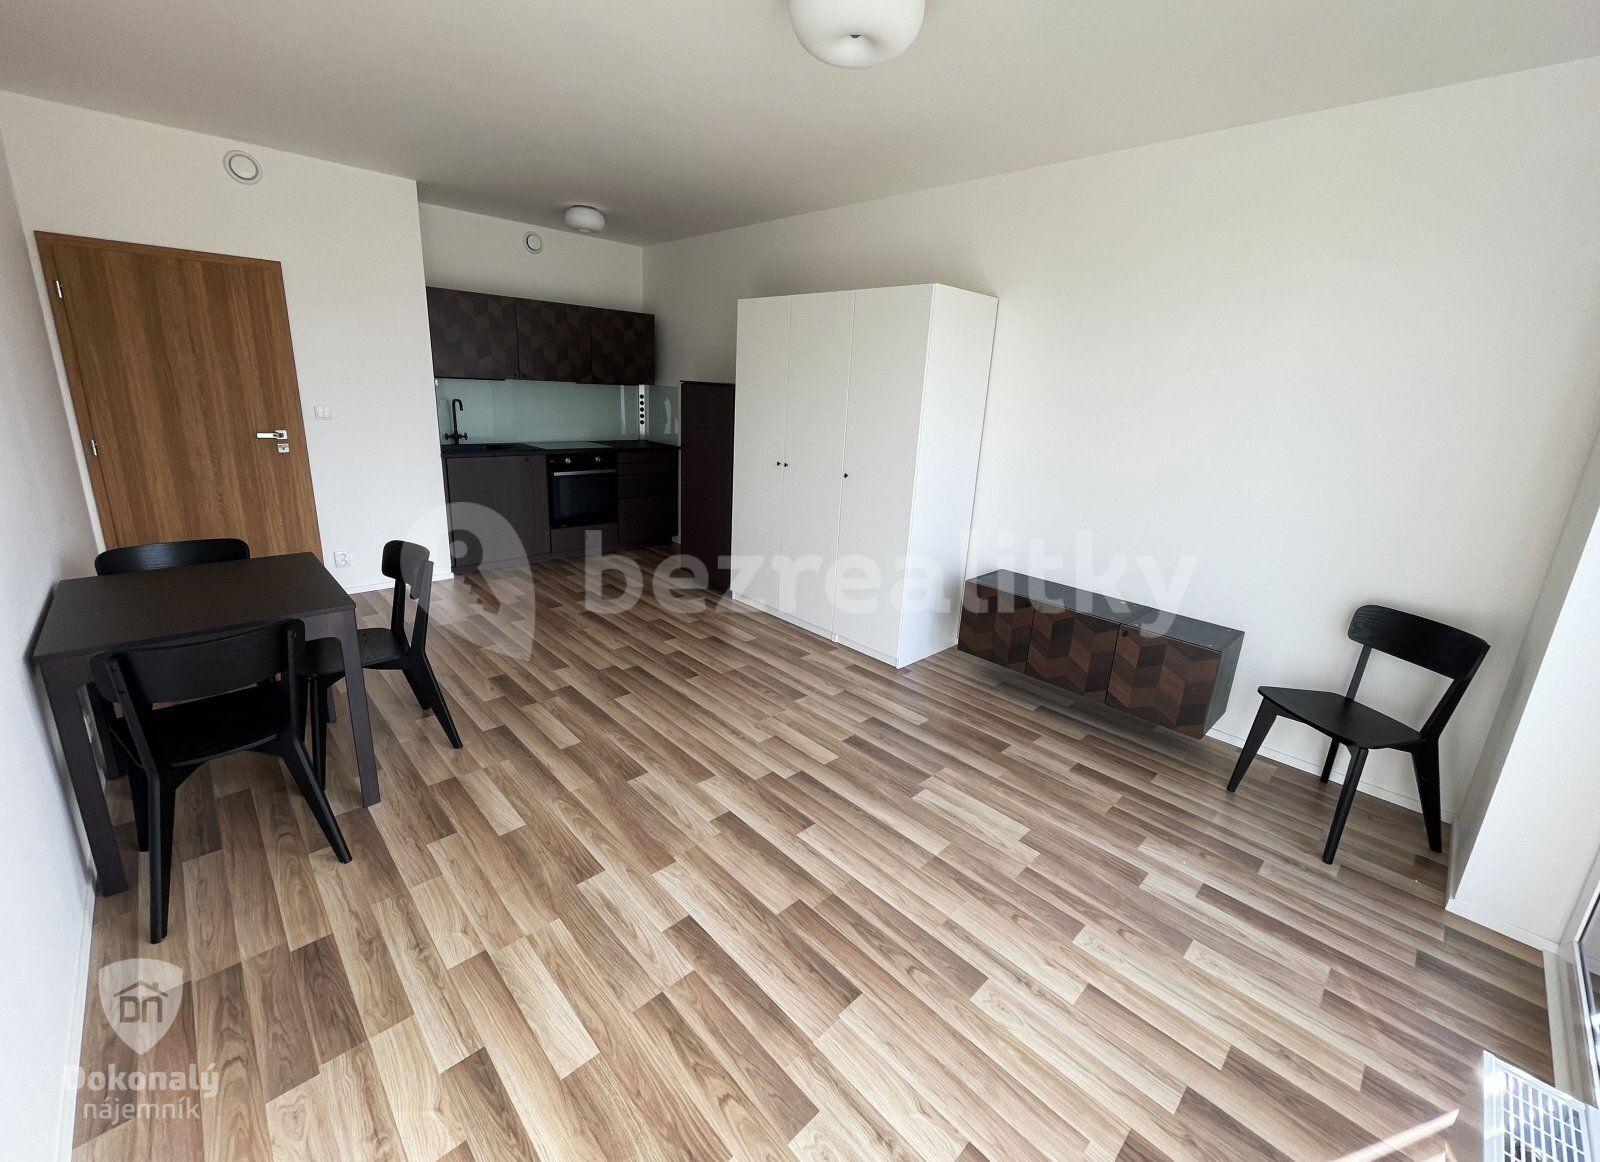 Studio flat to rent, 30 m², U Nového dvora, Prague, Prague